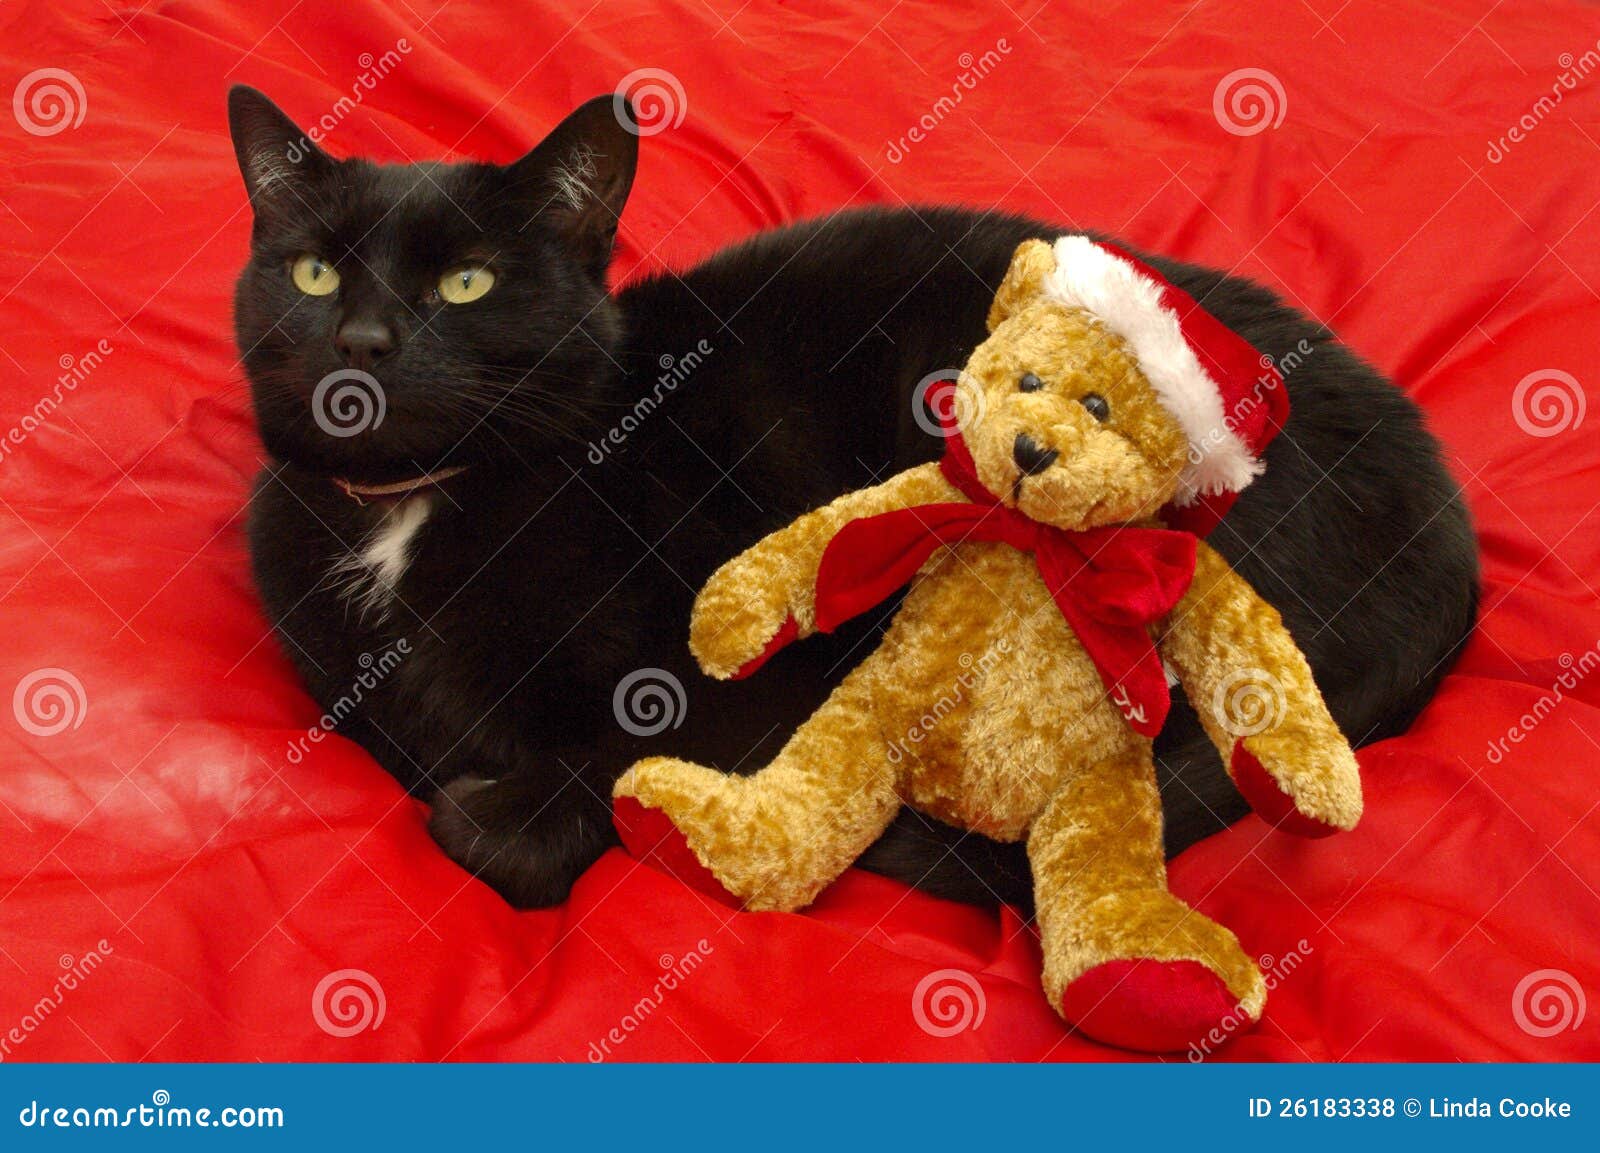 black cat teddy bear